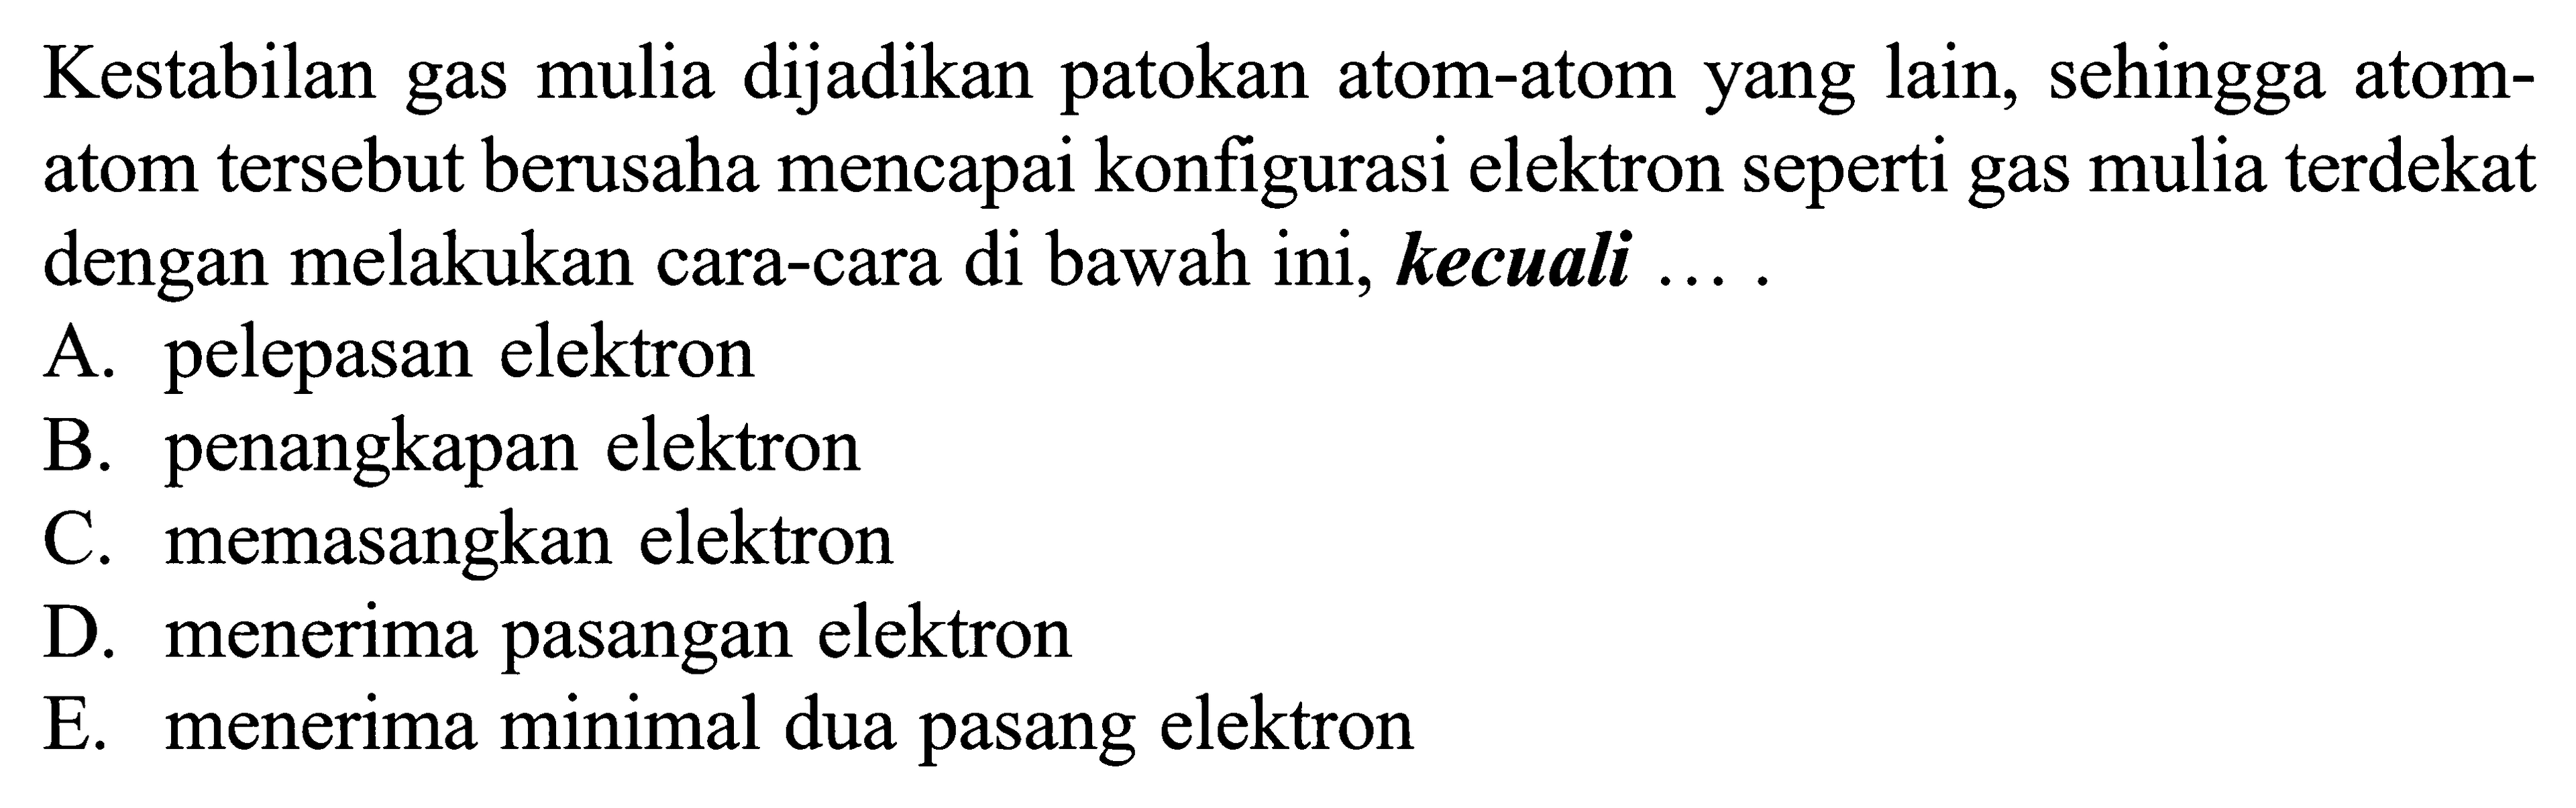 Kestabilan gas mulia dijadikan patokan atom-atom yang lain, sehingga atom- atom tersebut berusaha mencapai konfigurasi elektron seperti gas mulia terdekat dengan melakukan cara-cara di bawah ini, kecuali